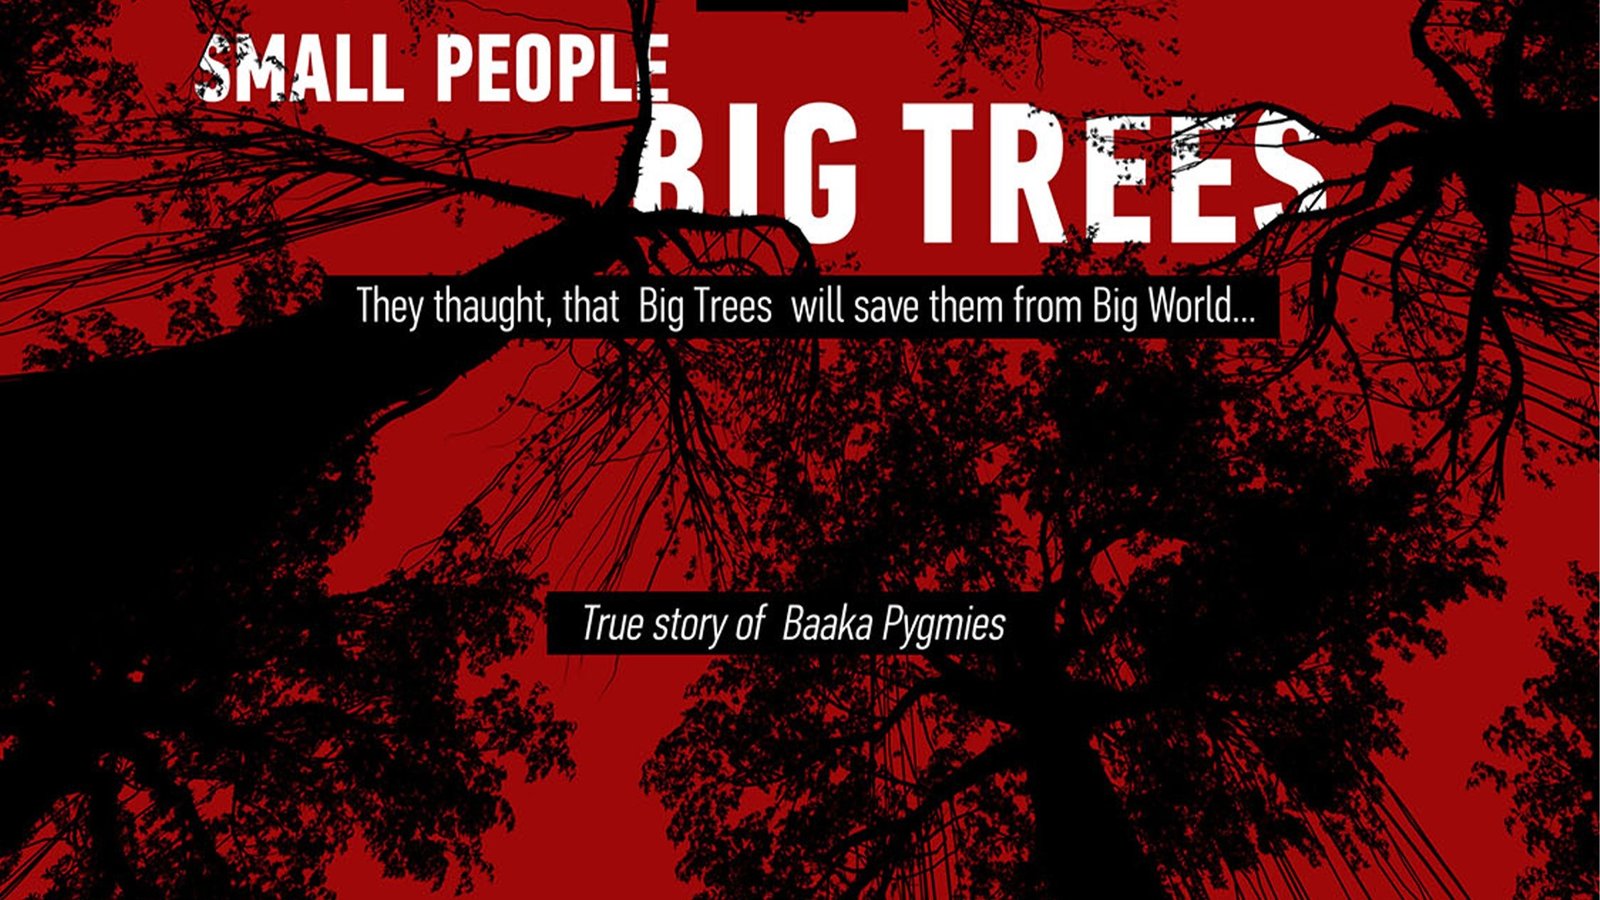 Small People, Big Trees